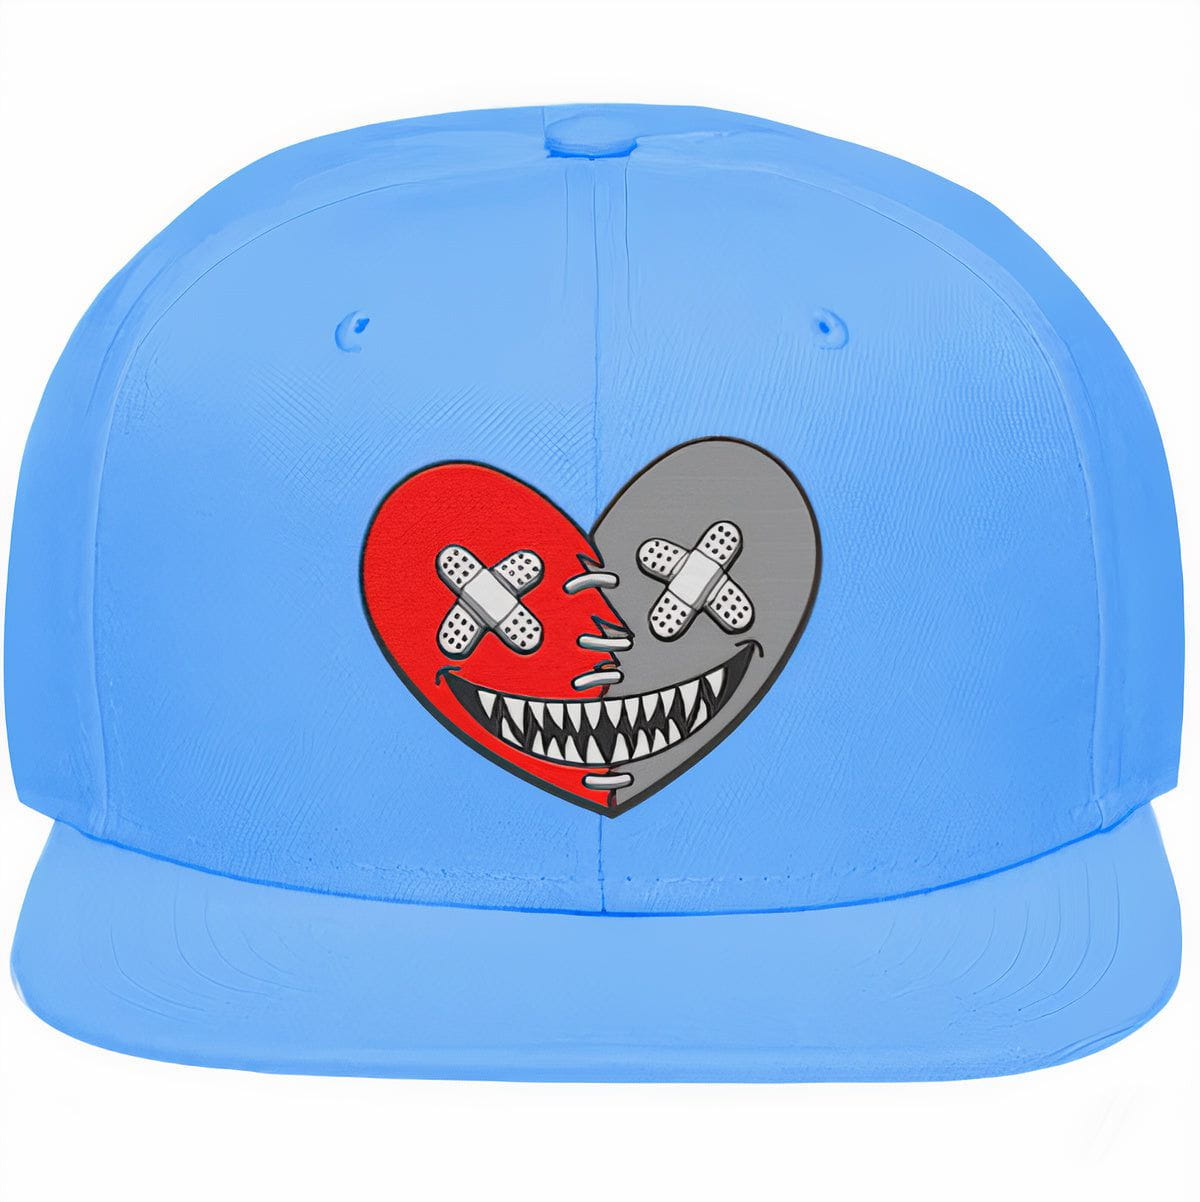 UNC 5s Snapback Hat - Jordan 5 University Blue 5s Hats - Heart